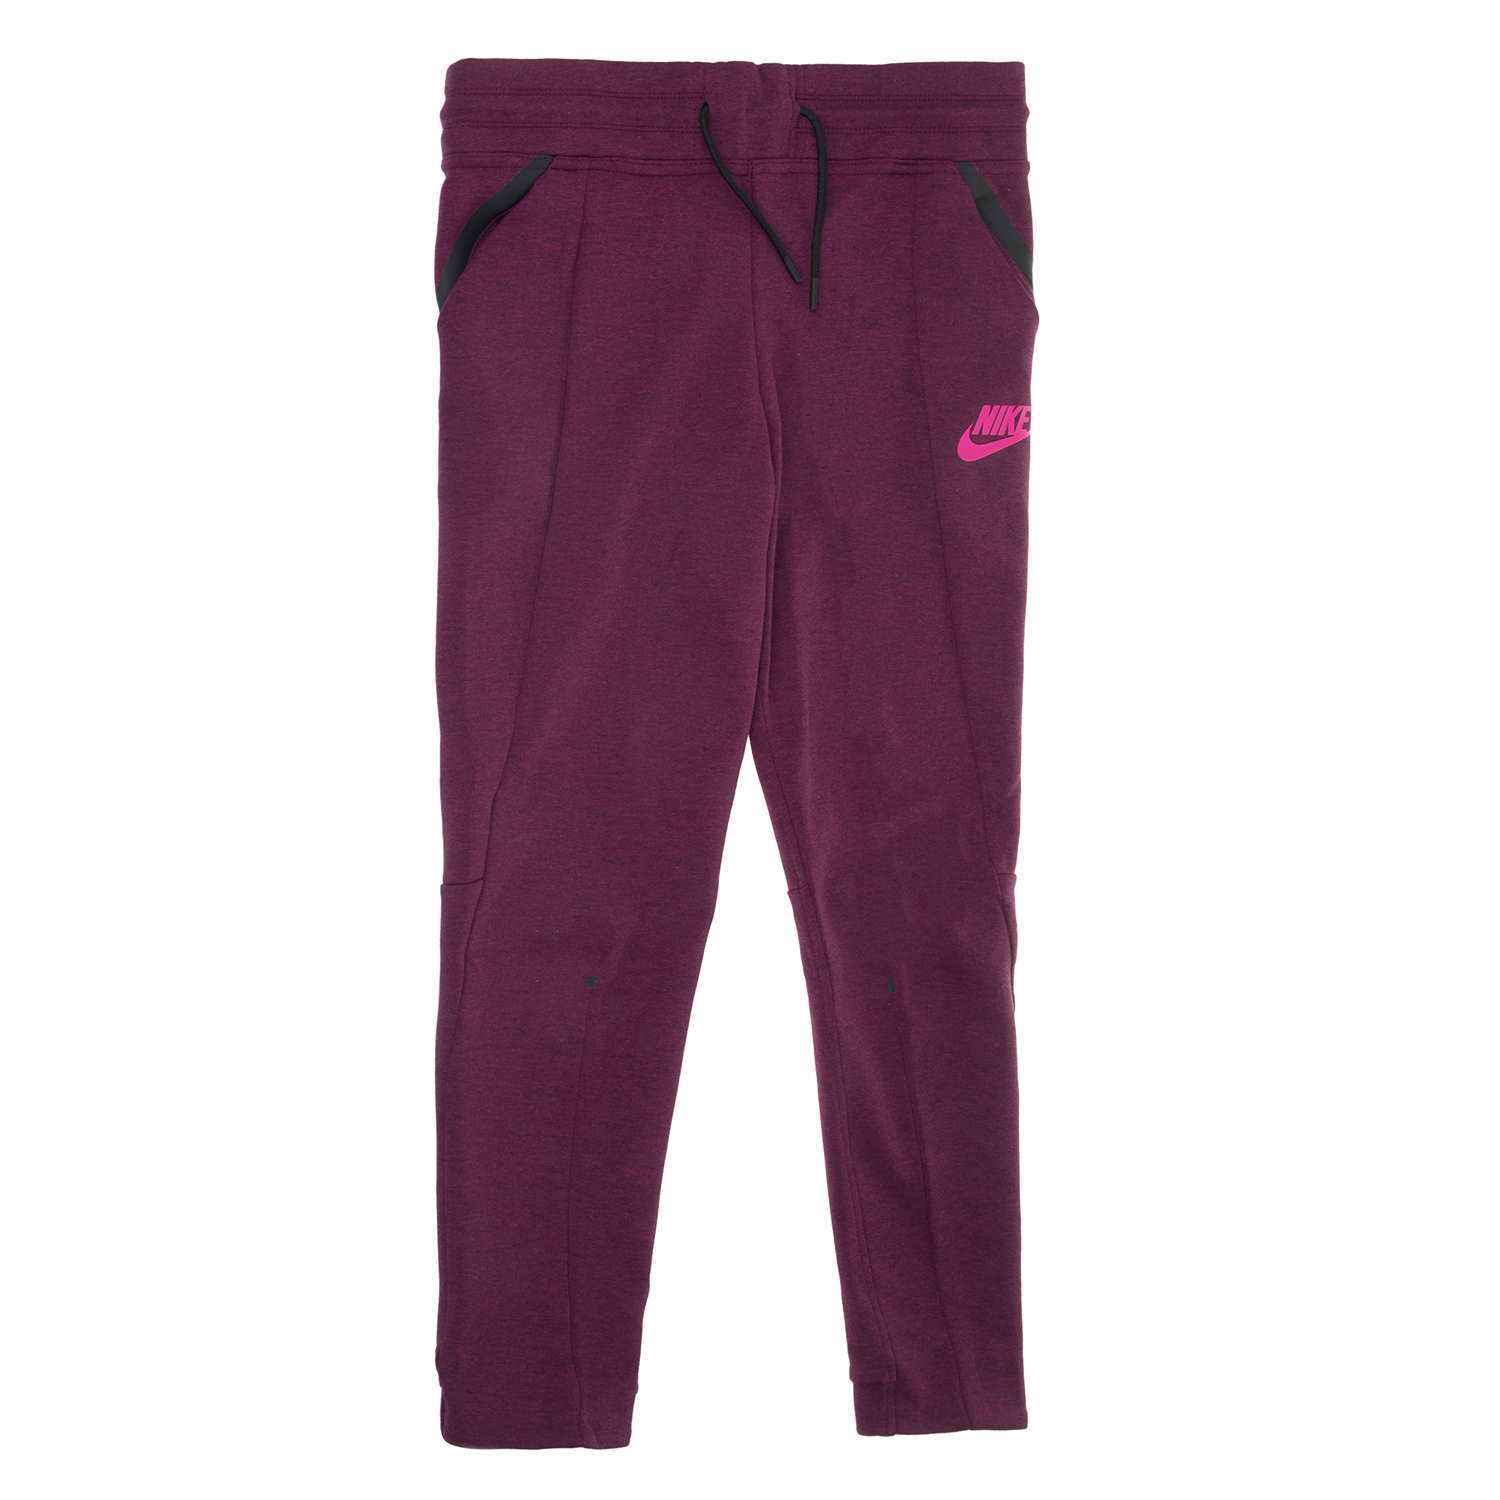 NIKE - Κοριτσίστικο παντελόνι φόρμας Nike TCH FLC μοβ-ροζ Παιδικά/Girls/Ρούχα/Αθλητικά